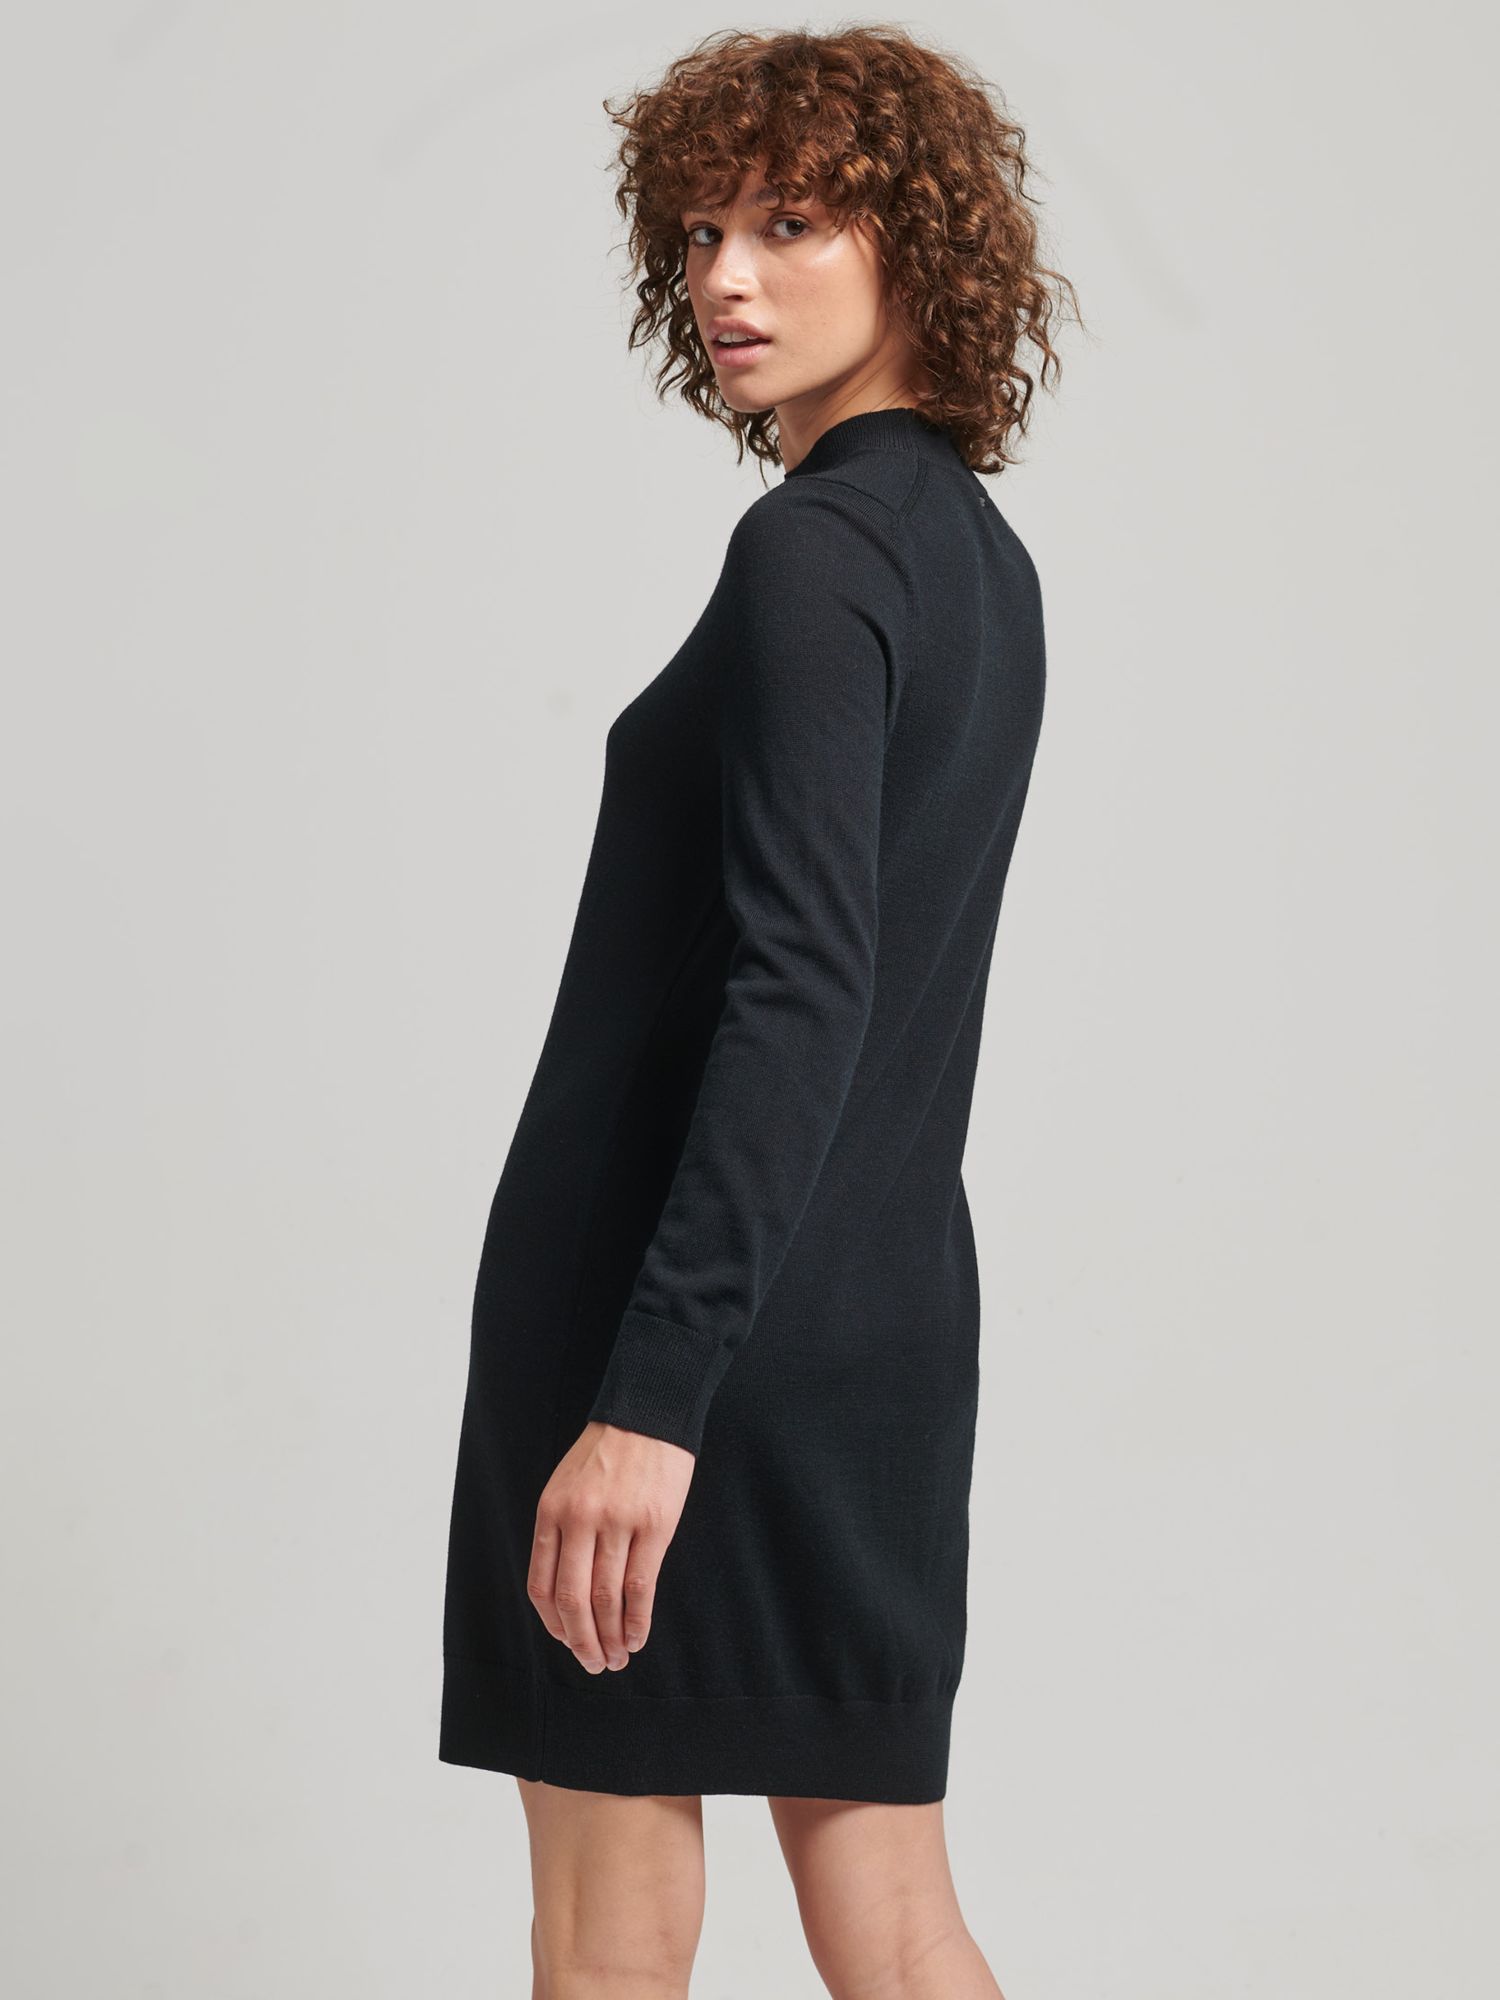 Superdry Merino Wool Long Sleeve Mini Dress, Black at John Lewis & Partners